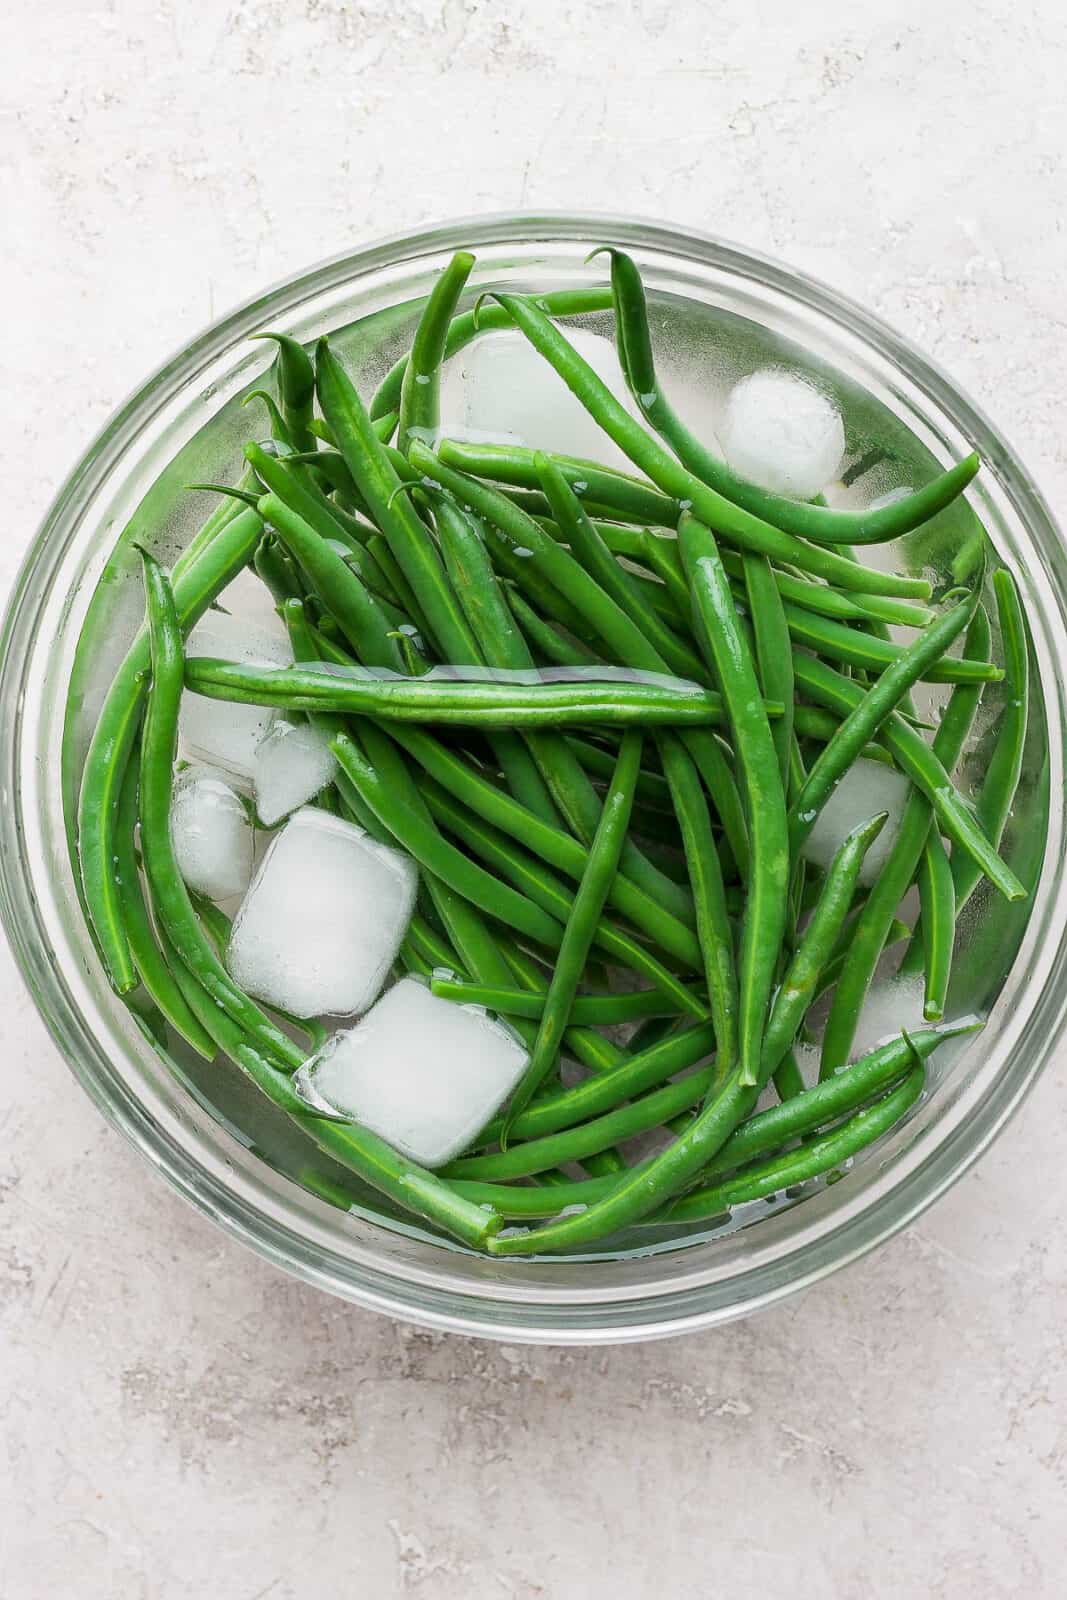 Green Beans in an ice bath.